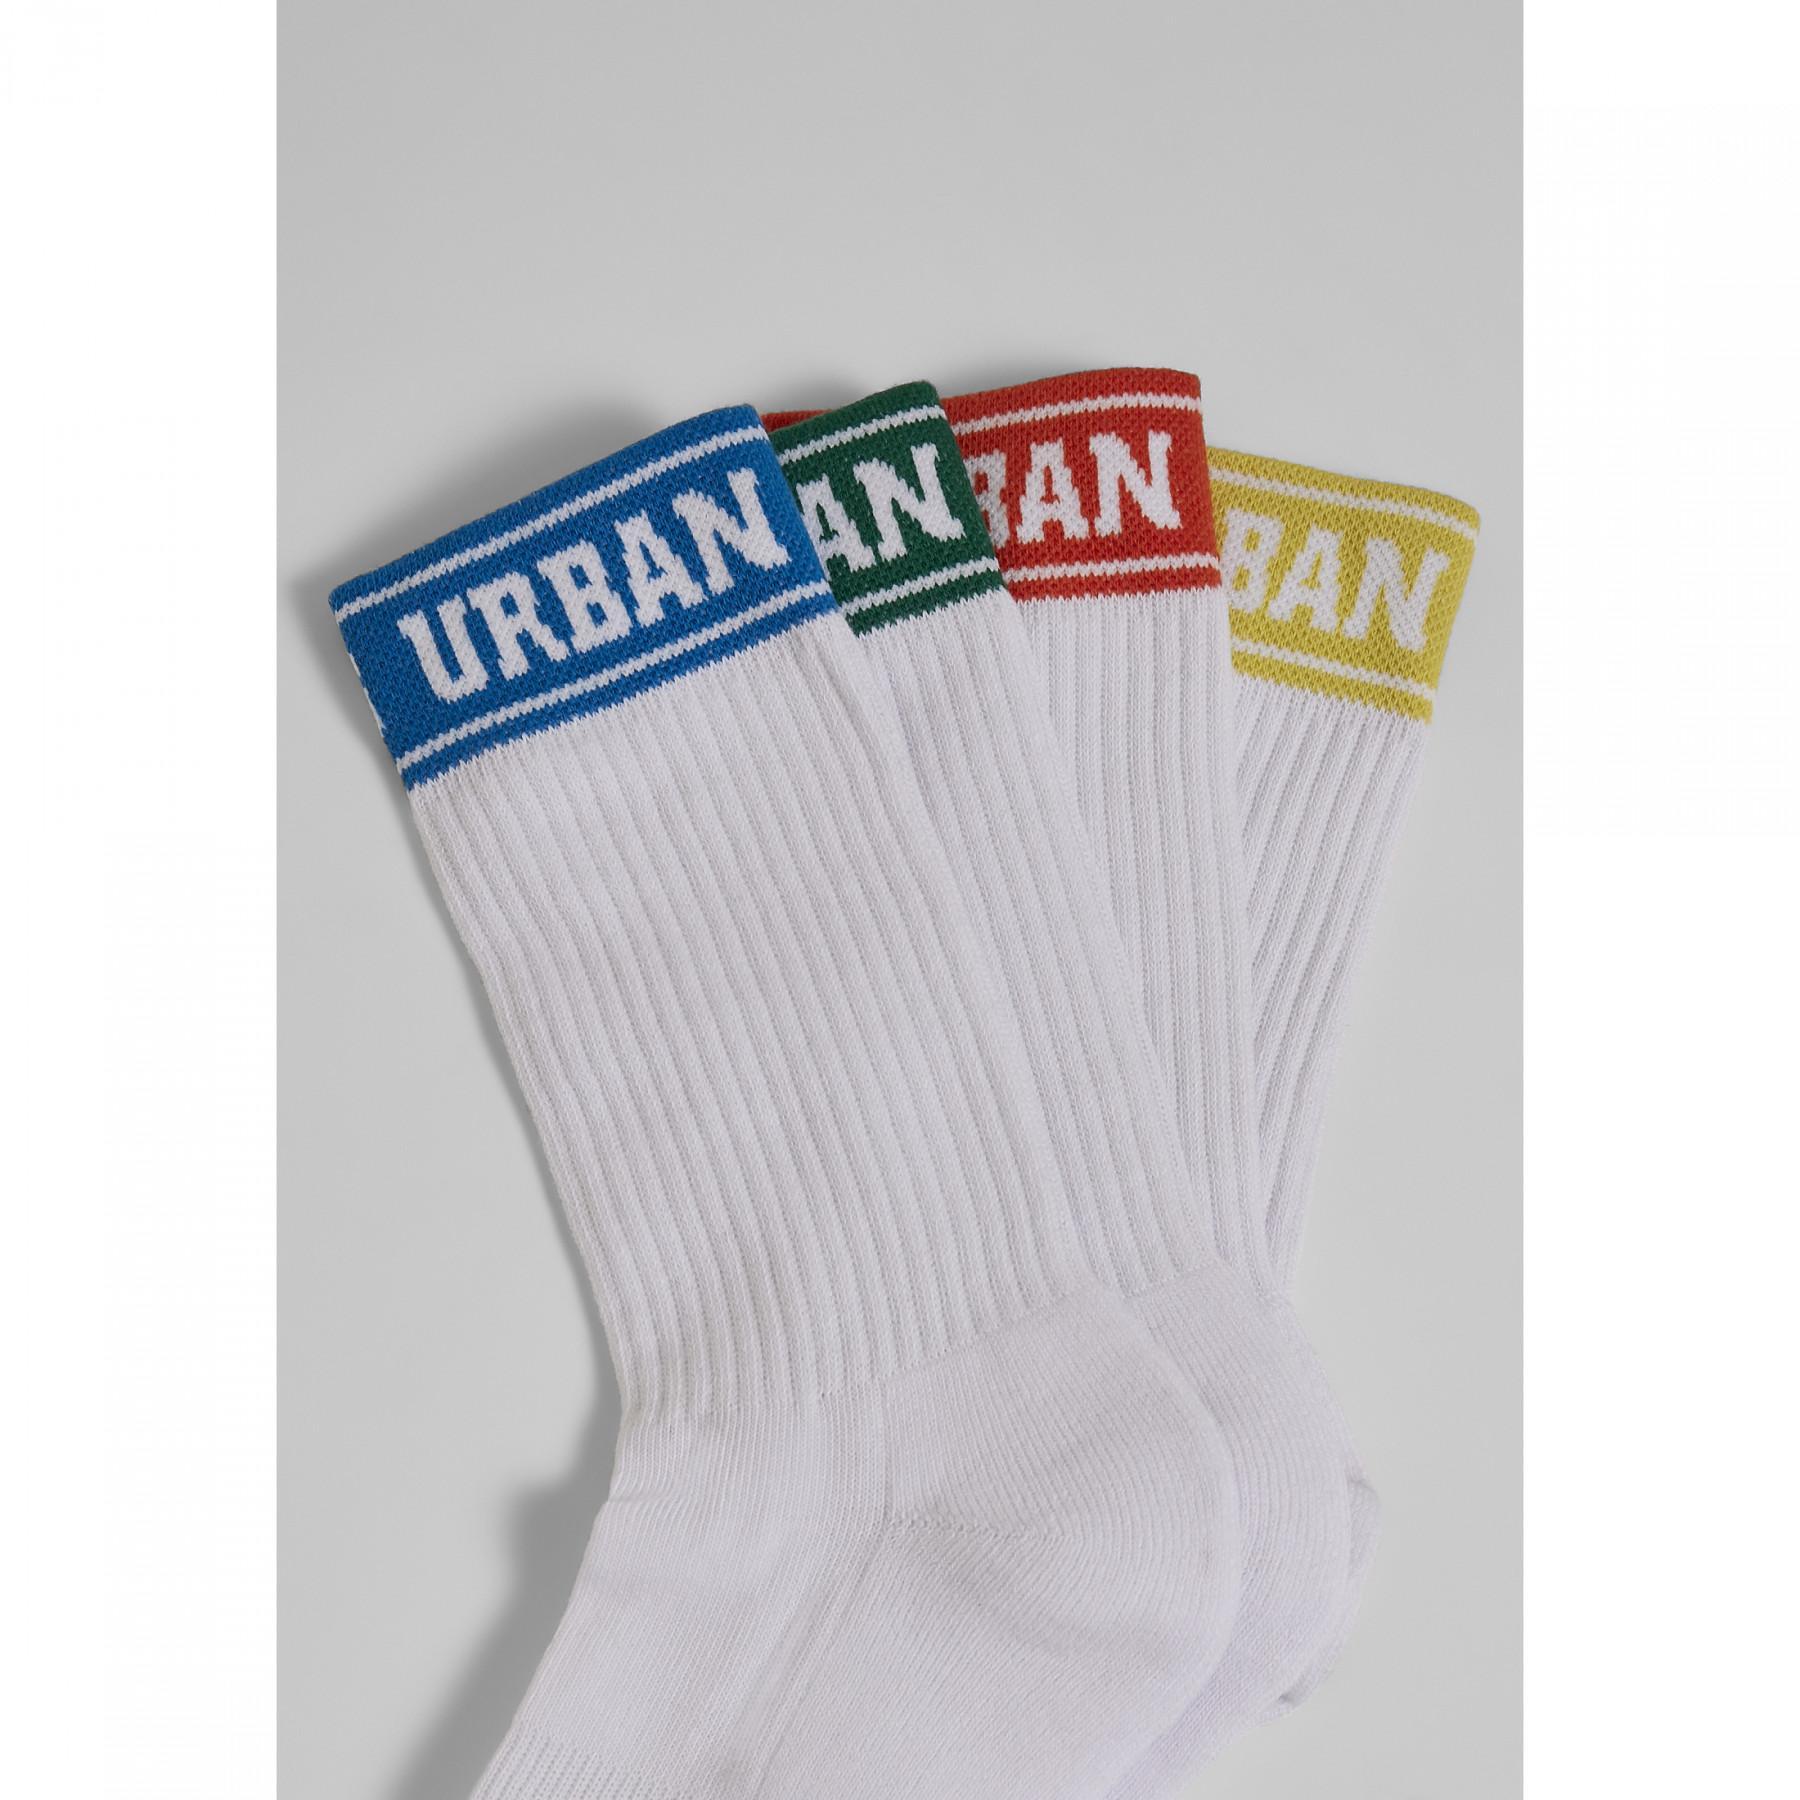 Socken Urban Classics Shorts sporty logo coloured cuff (4pcs)